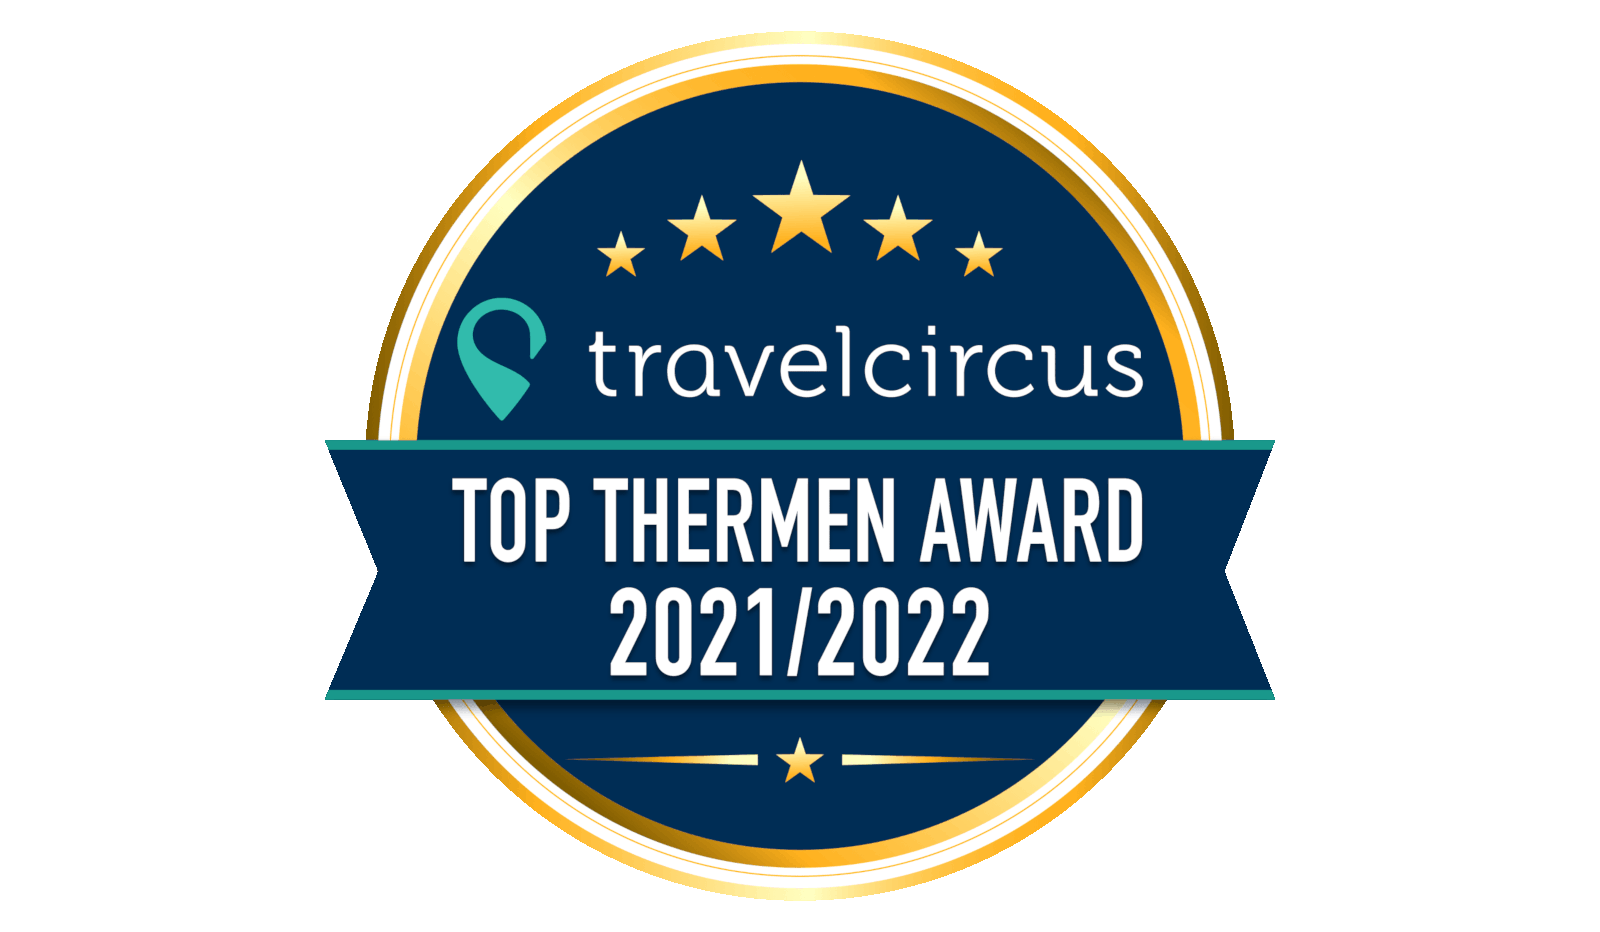 Travelcircus TOP Thermen Award 2021/22